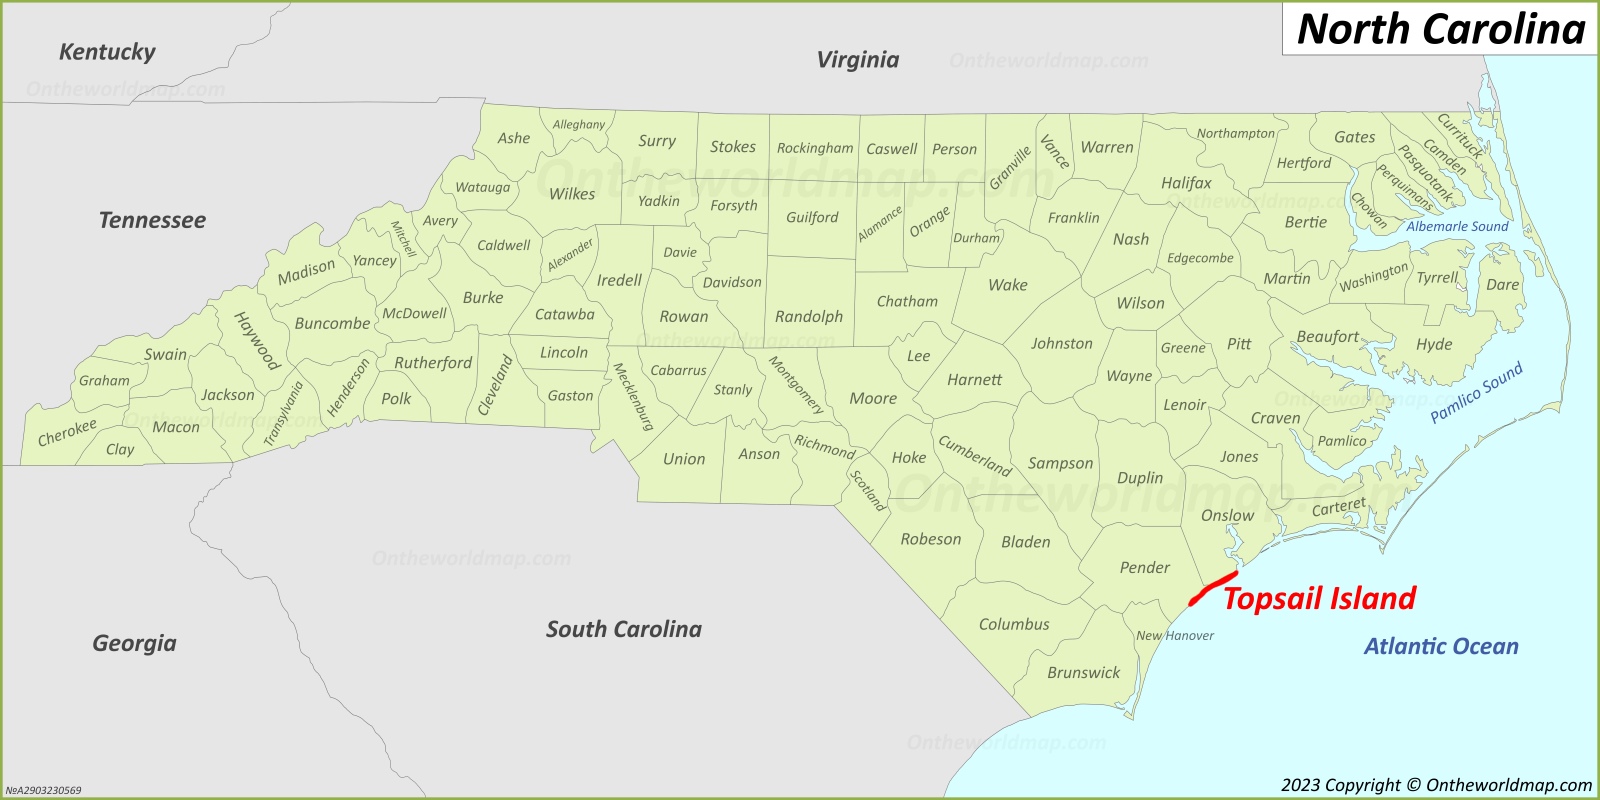 Topsail Island Location On The North Carolina Map